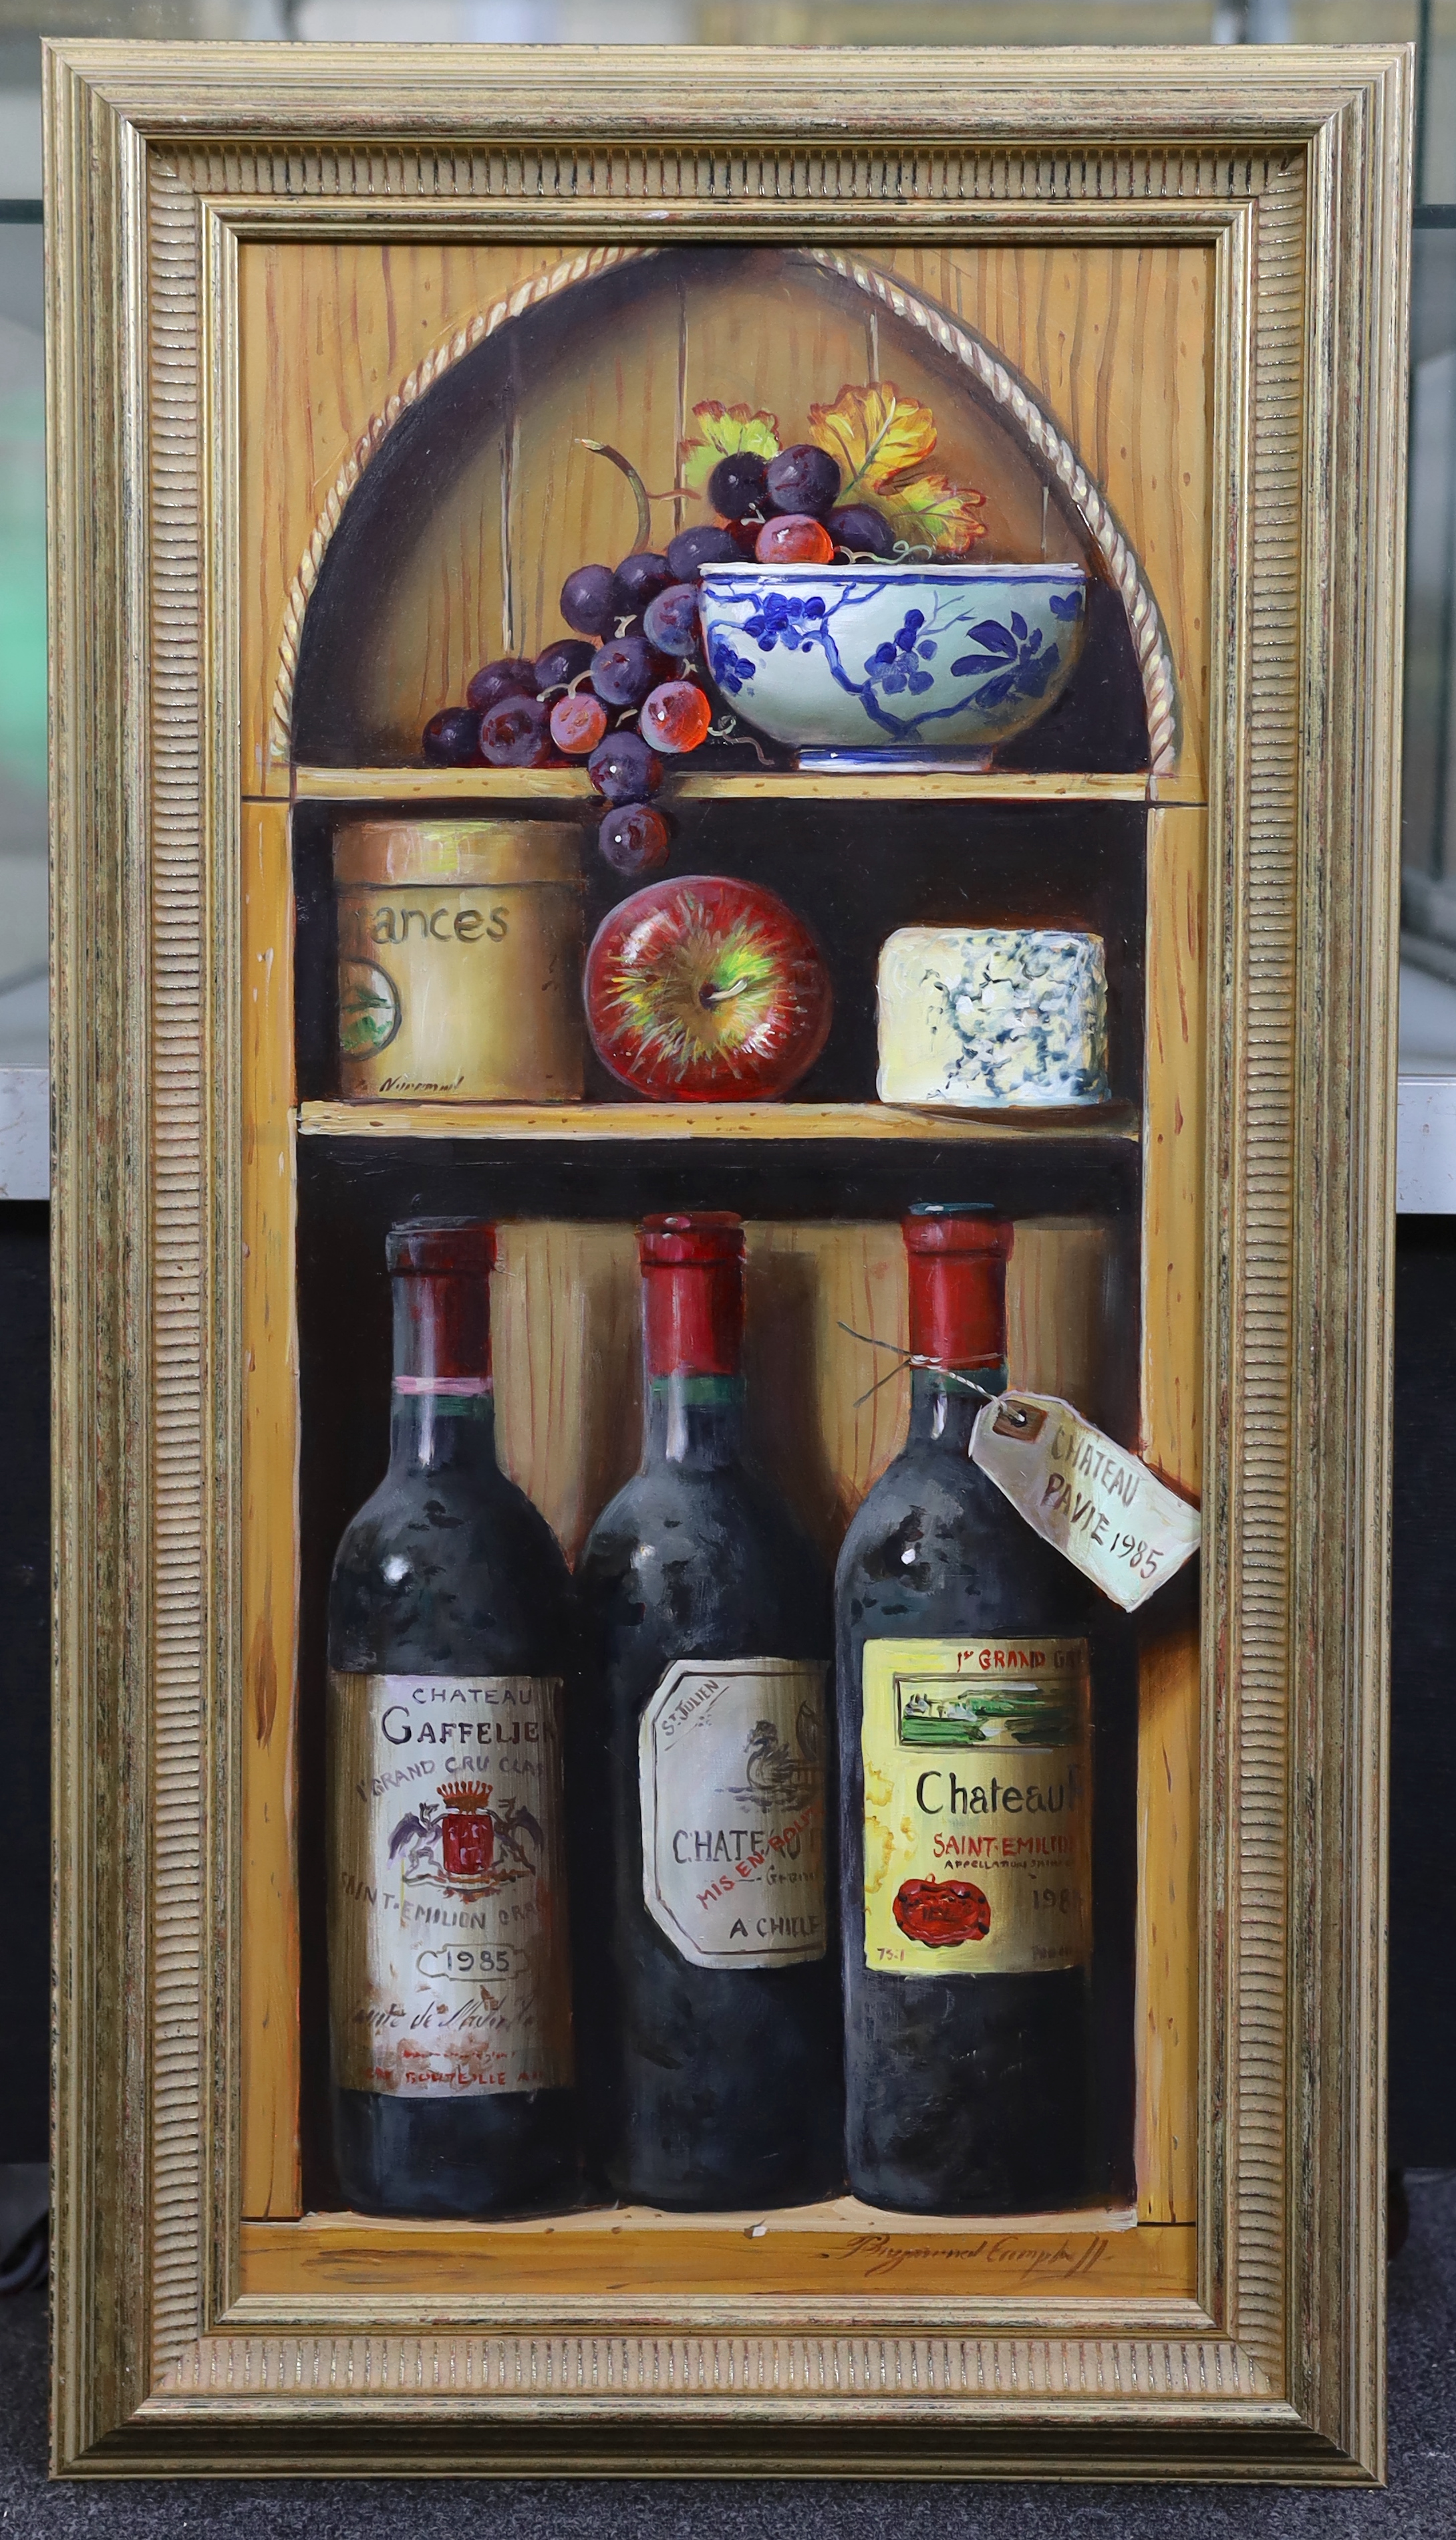 Raymond Campbell (English, 1956-), 'Chateau Pavie 1985', oil on board, 59 x 28cm